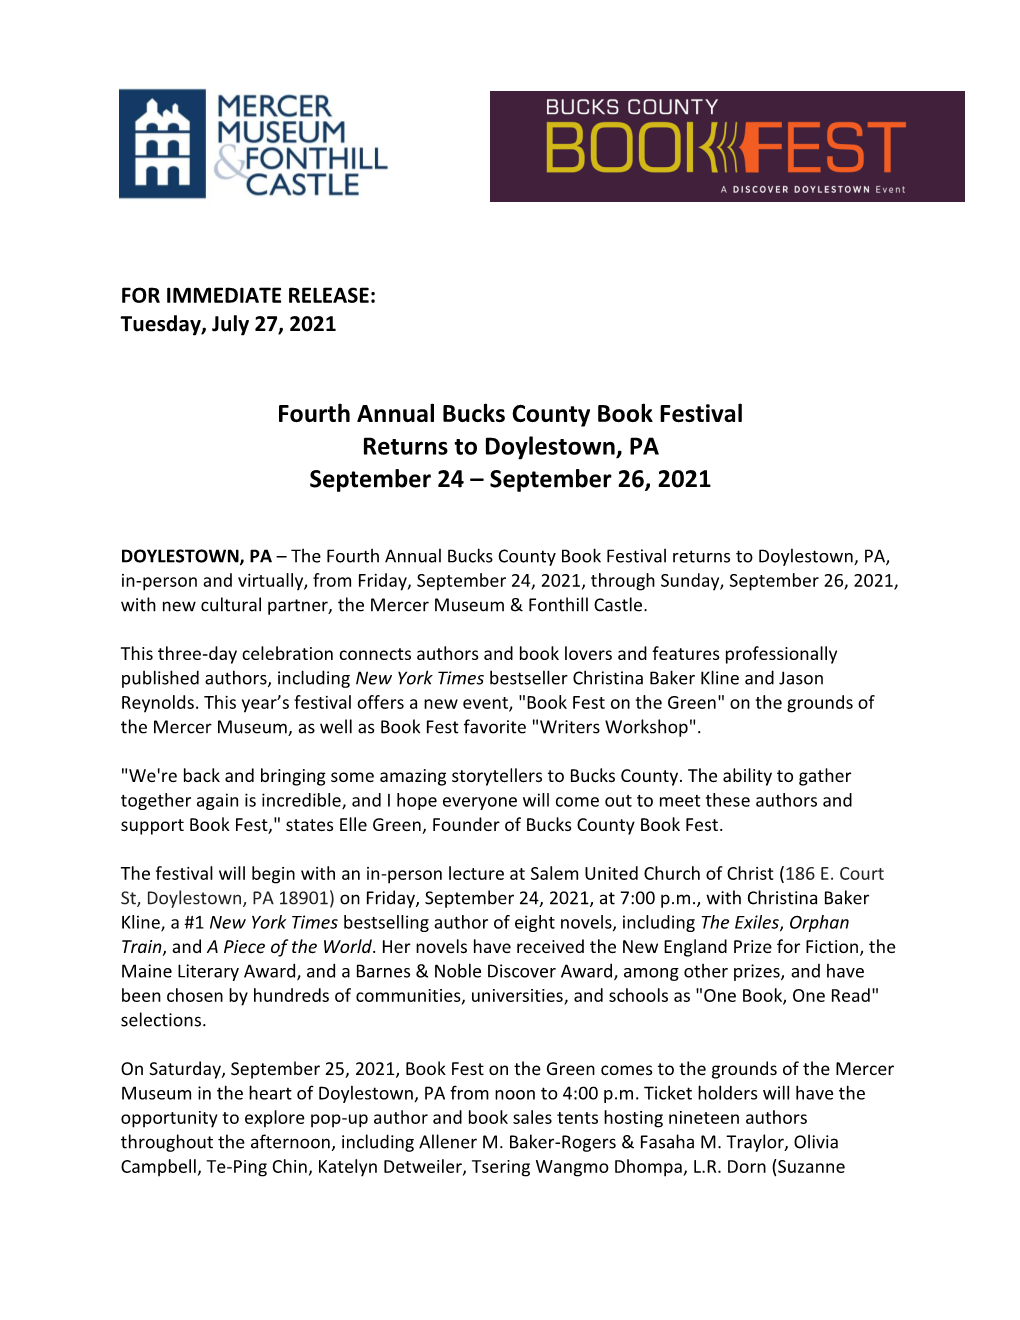 Fourth Annual Bucks County Book Festival Returns to Doylestown, PA September 24 – September 26, 2021